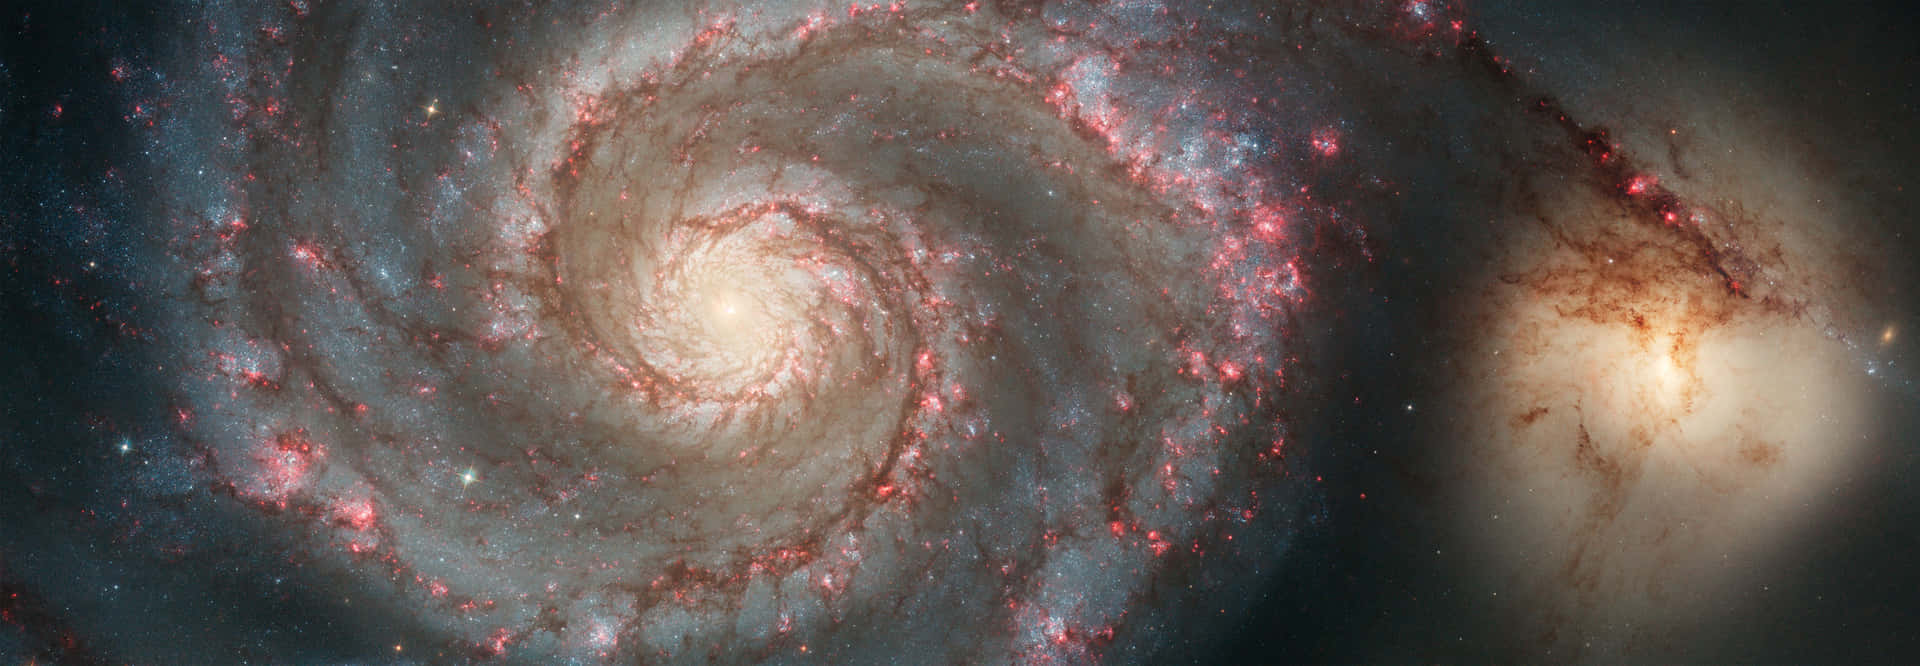 Majestic Whirlpool Galaxy in High Resolution Wallpaper